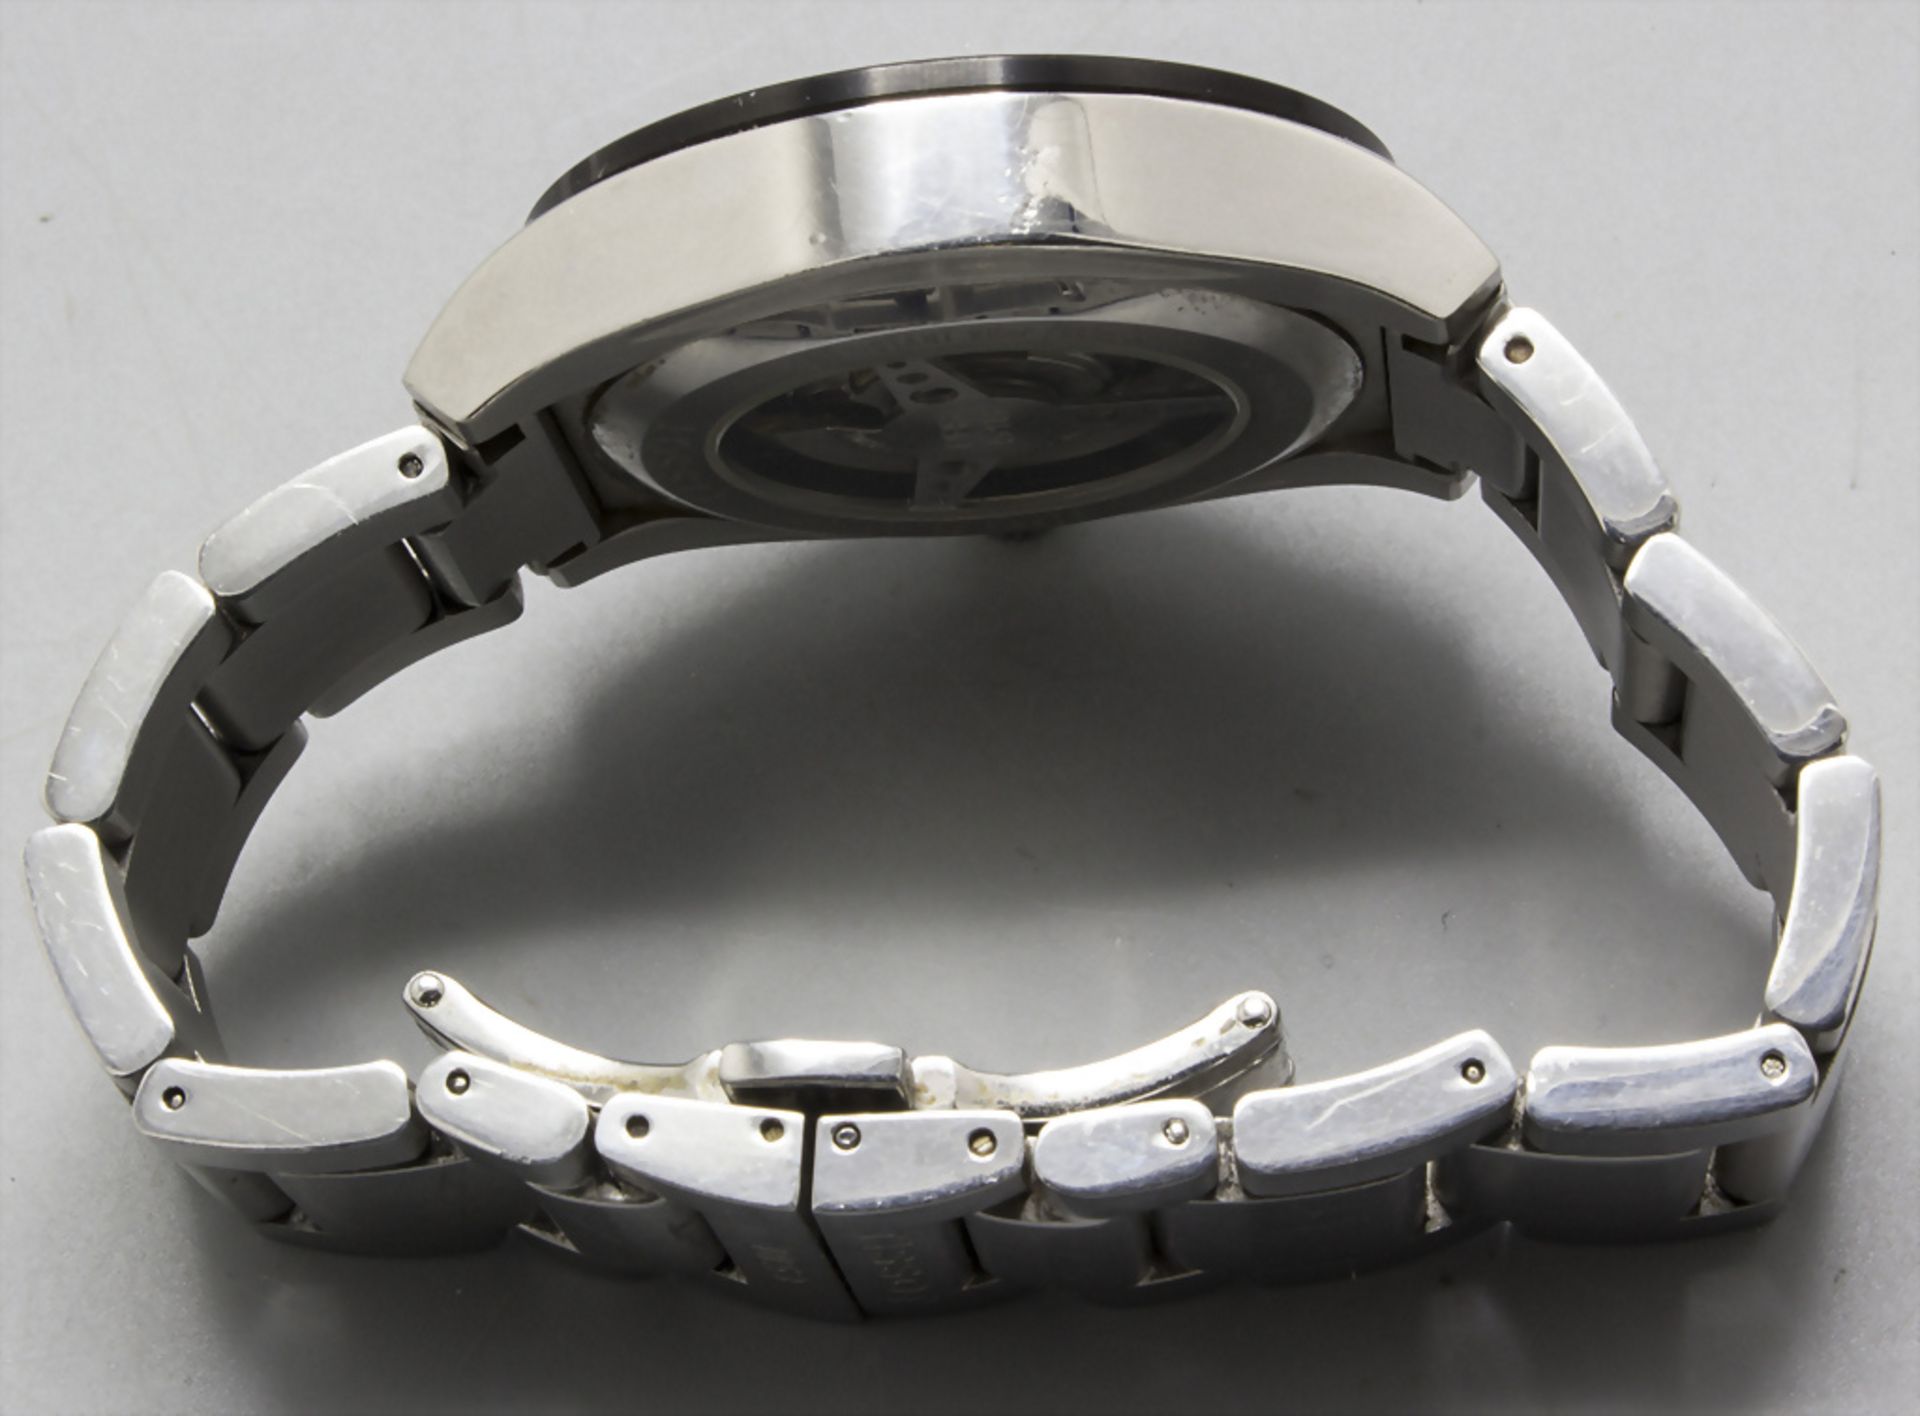 HAU Tissot PRS 516 Automatik / A men's wrist watch, Schweiz / Swiss um 2000 - Bild 5 aus 6